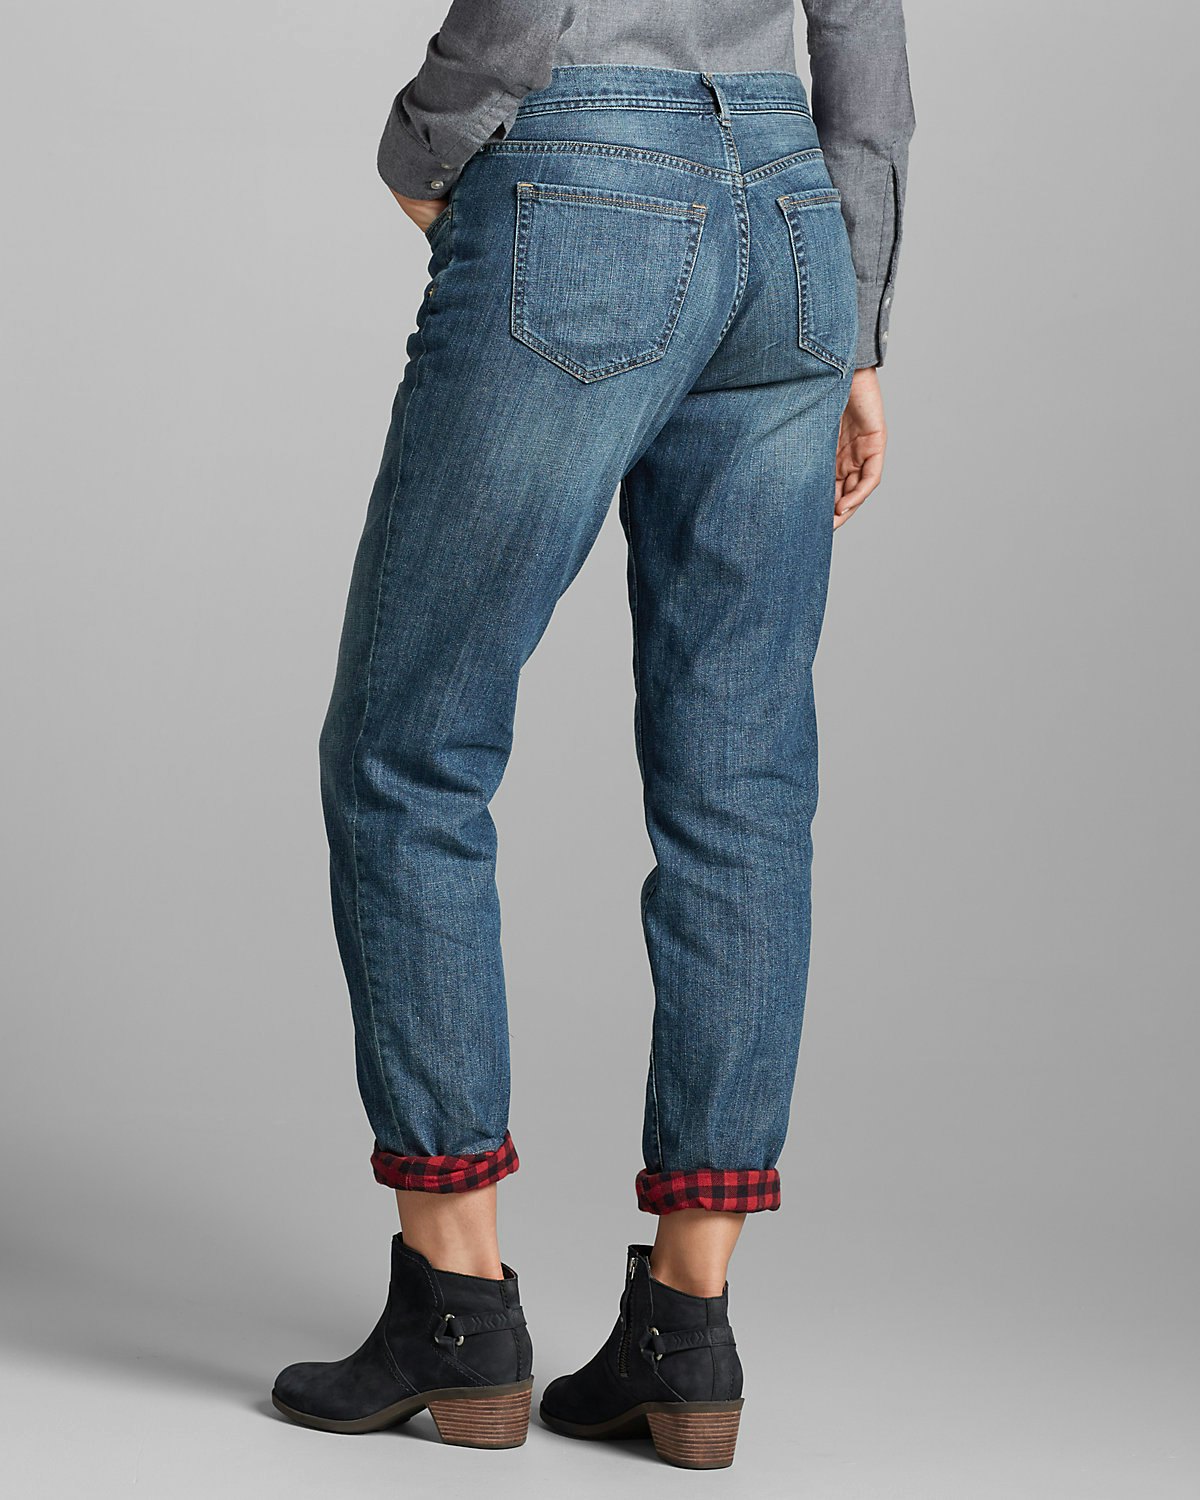 eddie bauer lined jeans